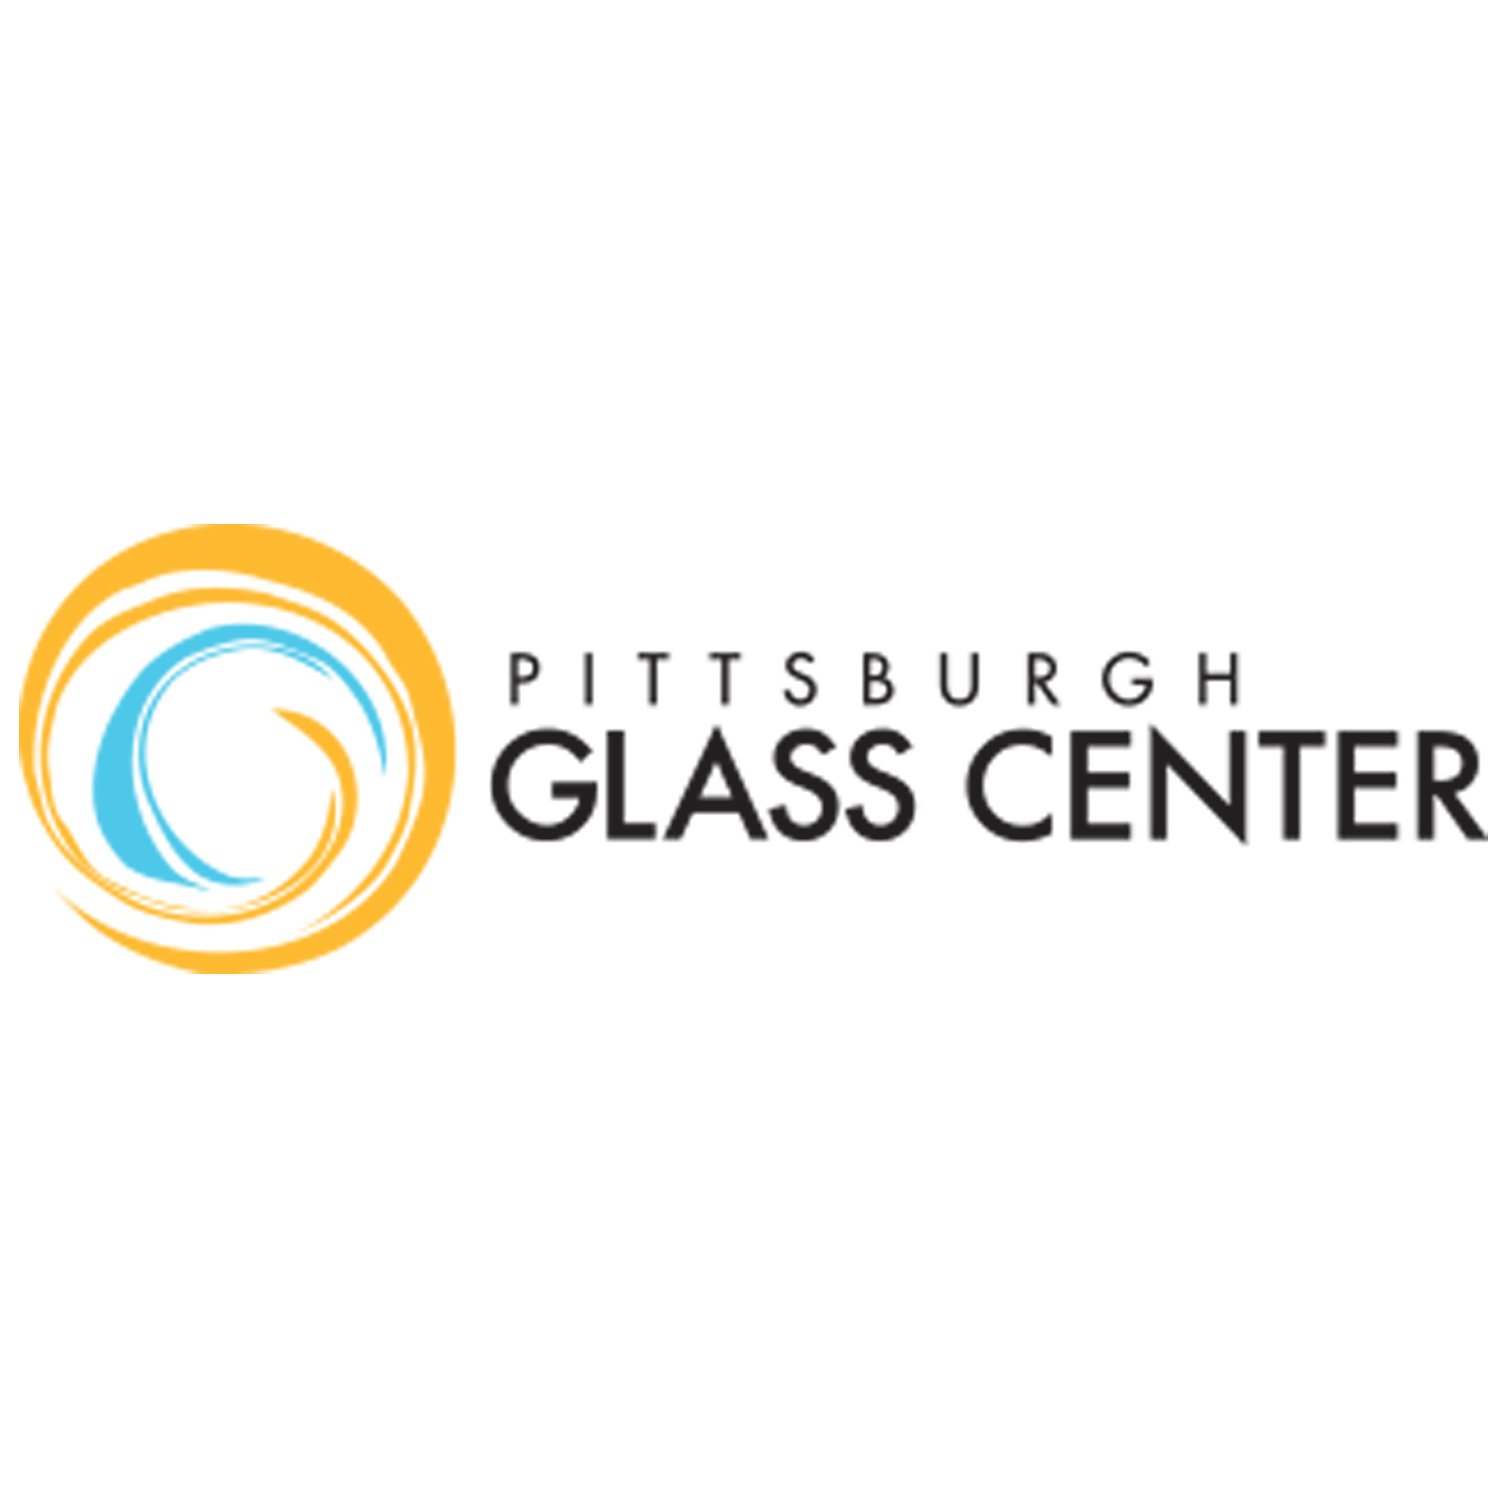 Pittsburgh Glass Center.jpg